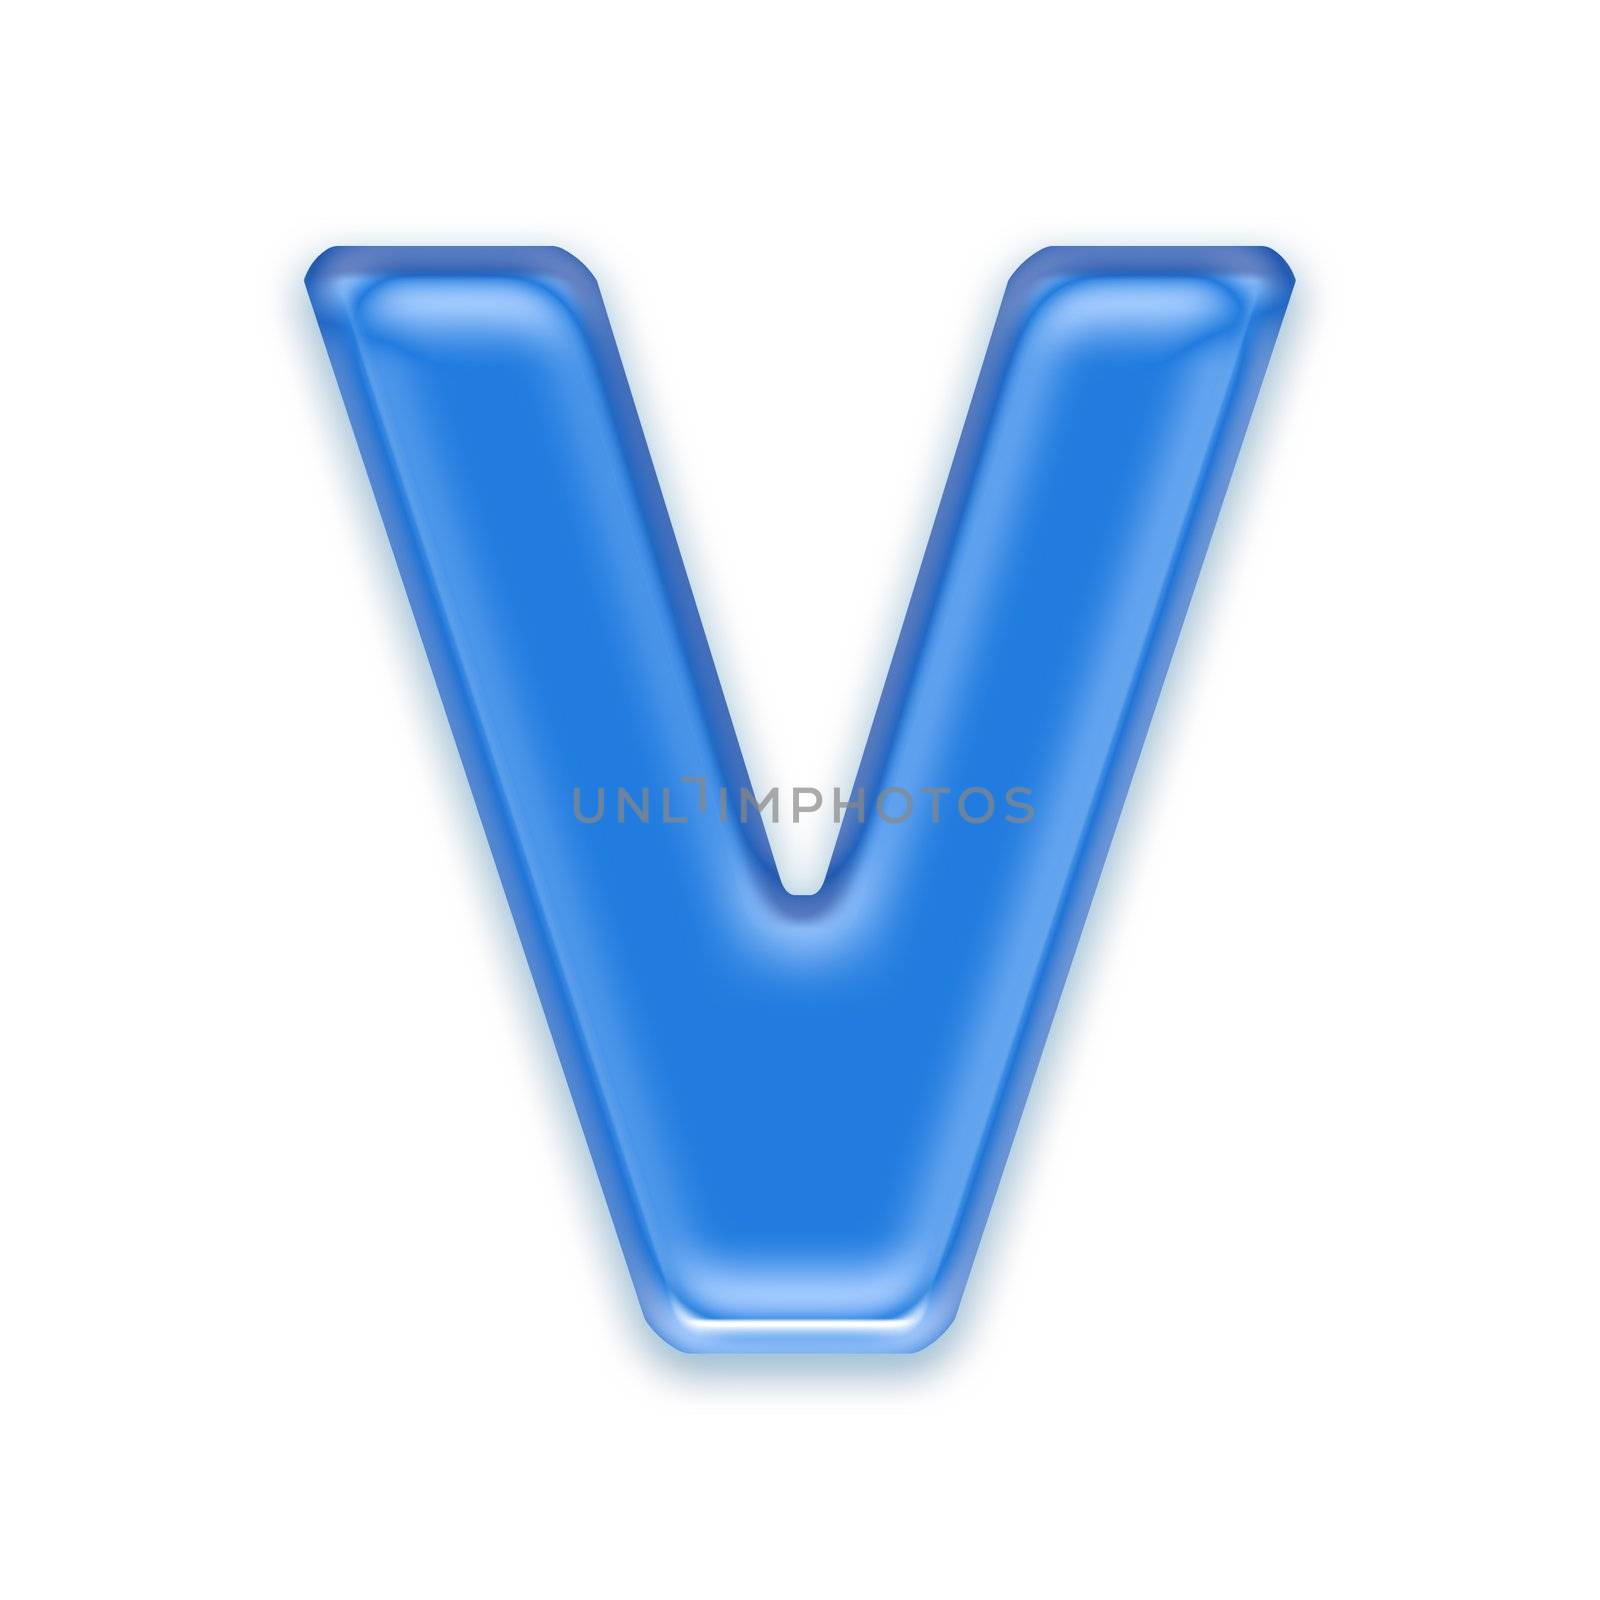 Aqua letter isolated on white background  - V by chrisroll